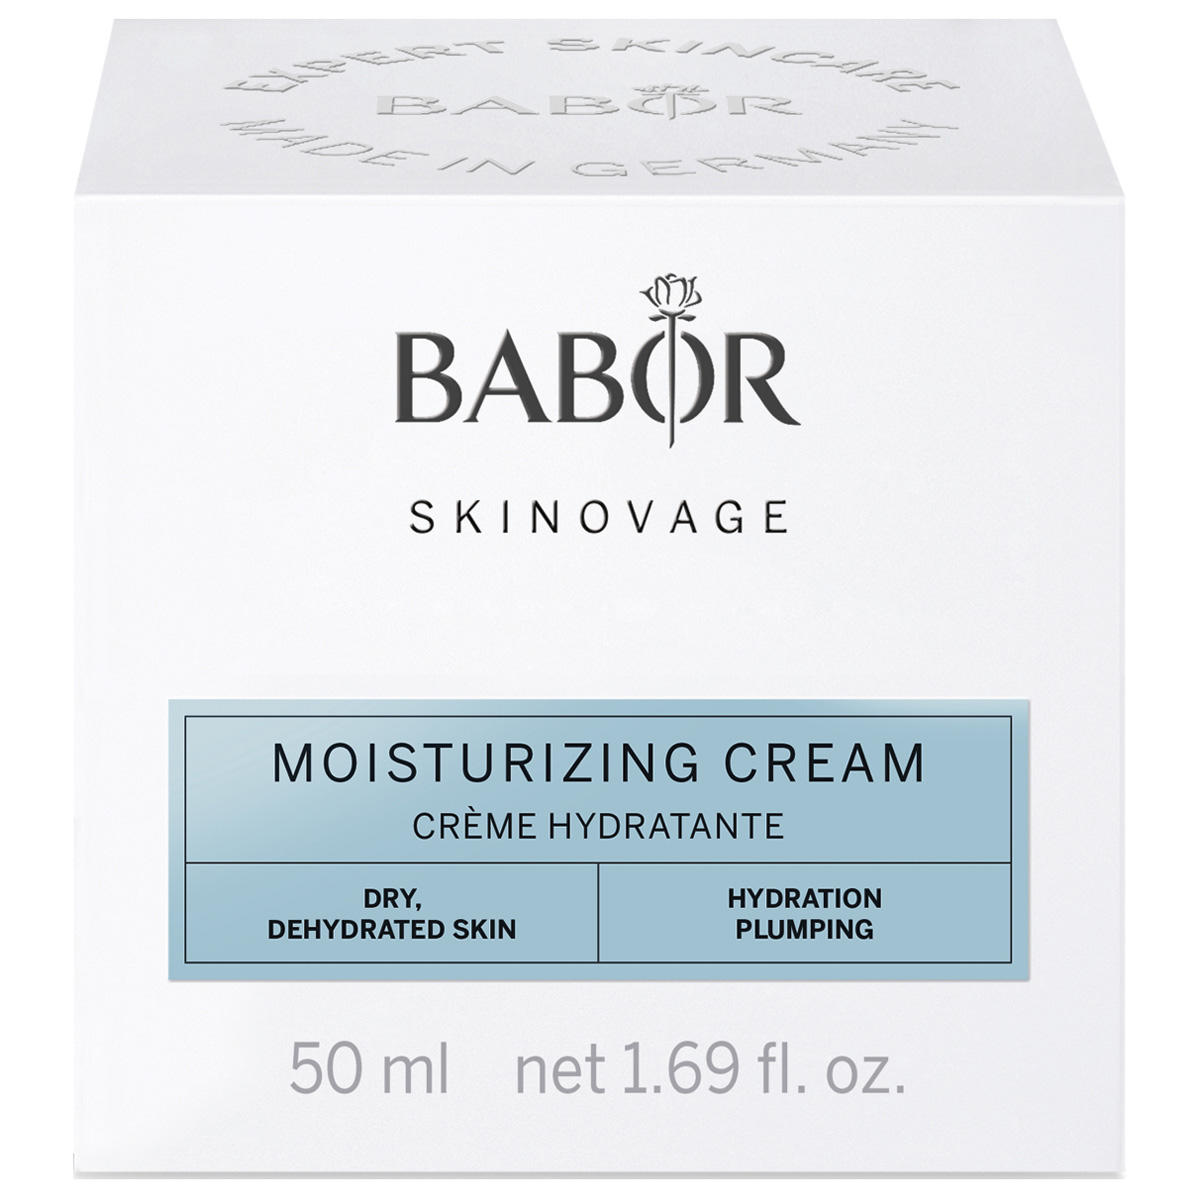 BABOR SKINOVAGE Moisturizing Cream  50 ml - 2